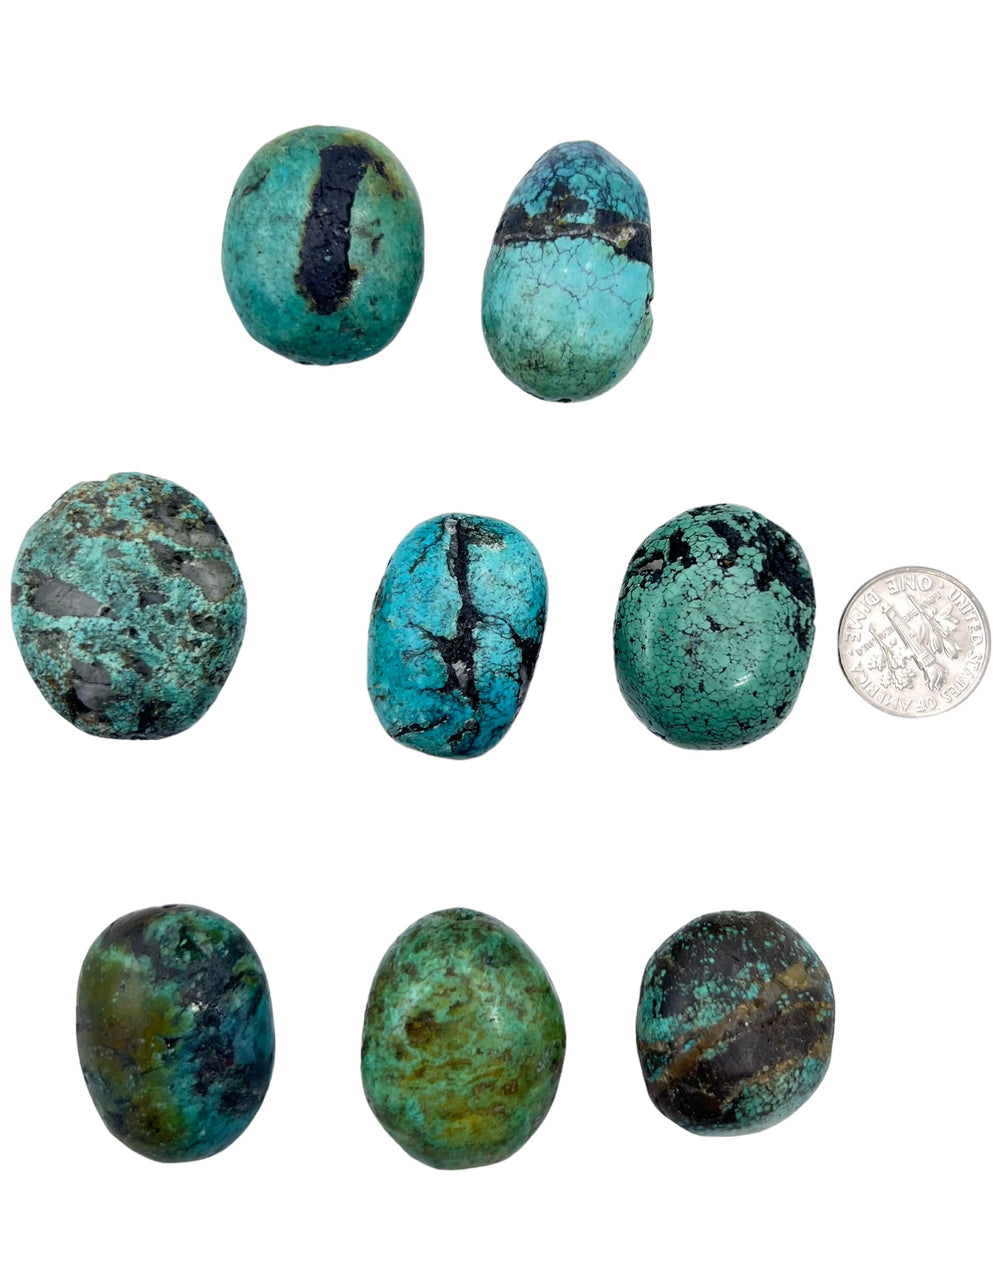 Hubei Turquoise (China) Large Rounded Nugget Beads (Select